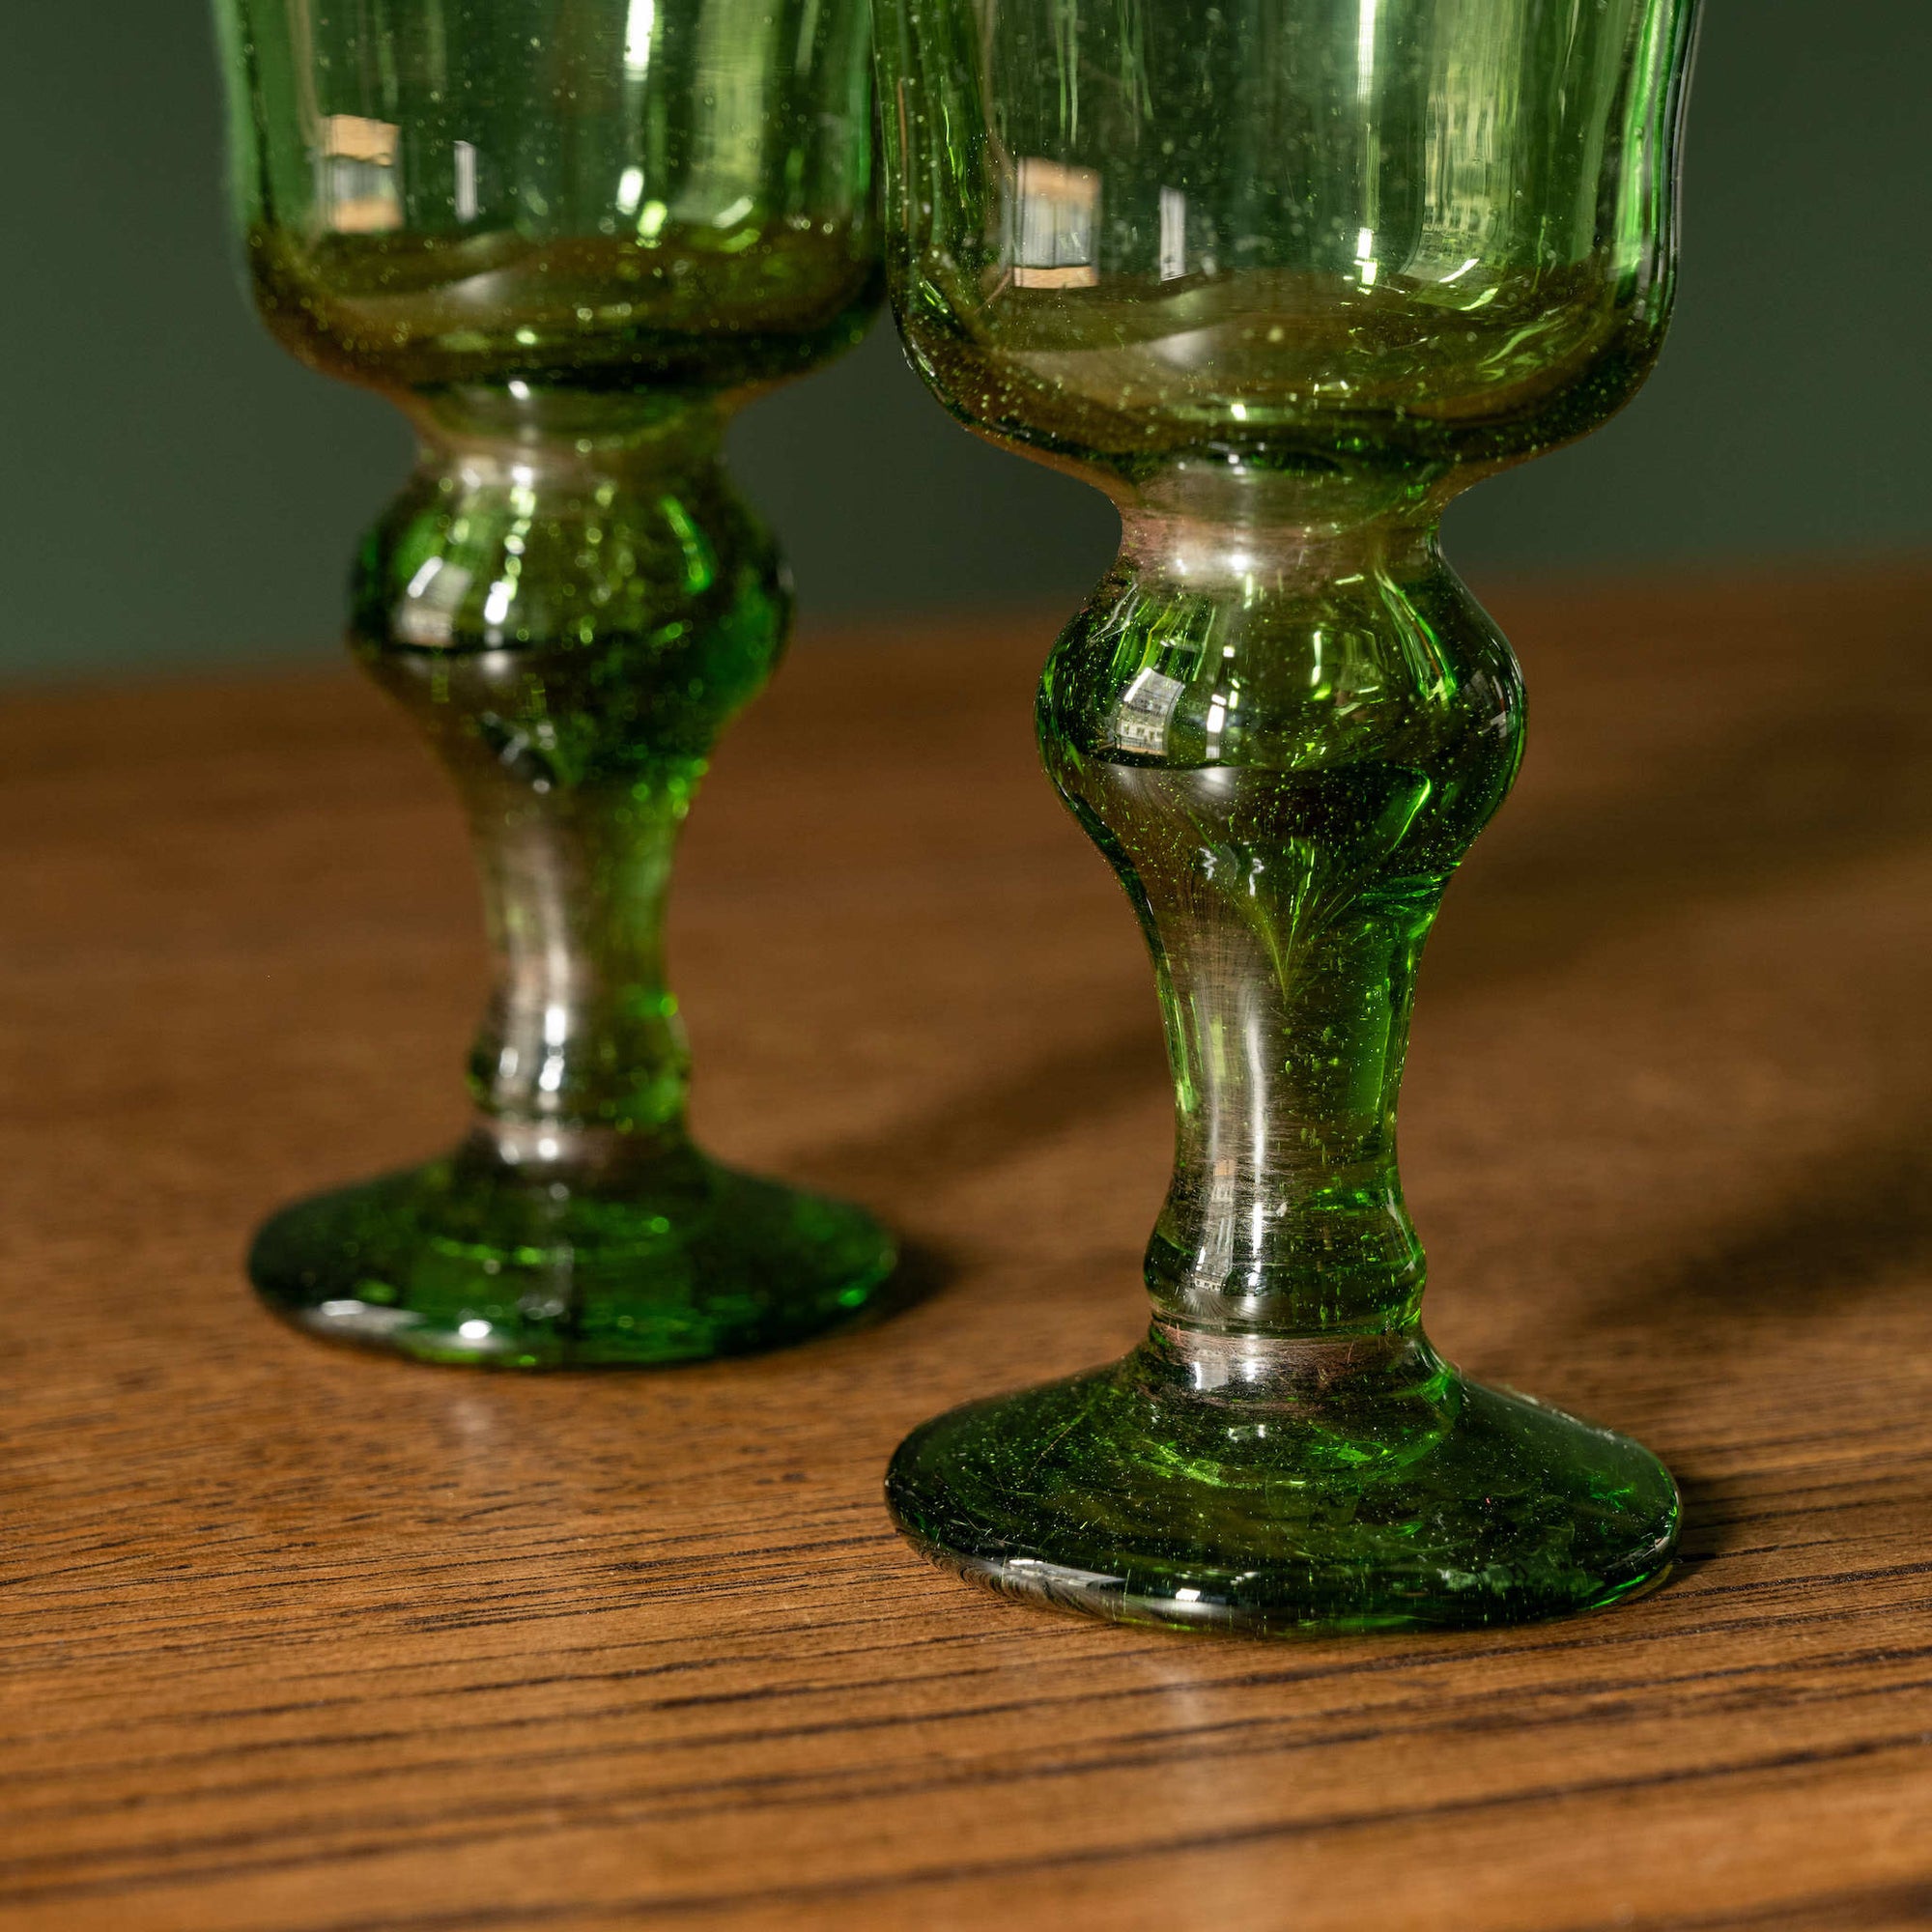 La Soufflerie White Wine Glass stem & base in green recycled glass